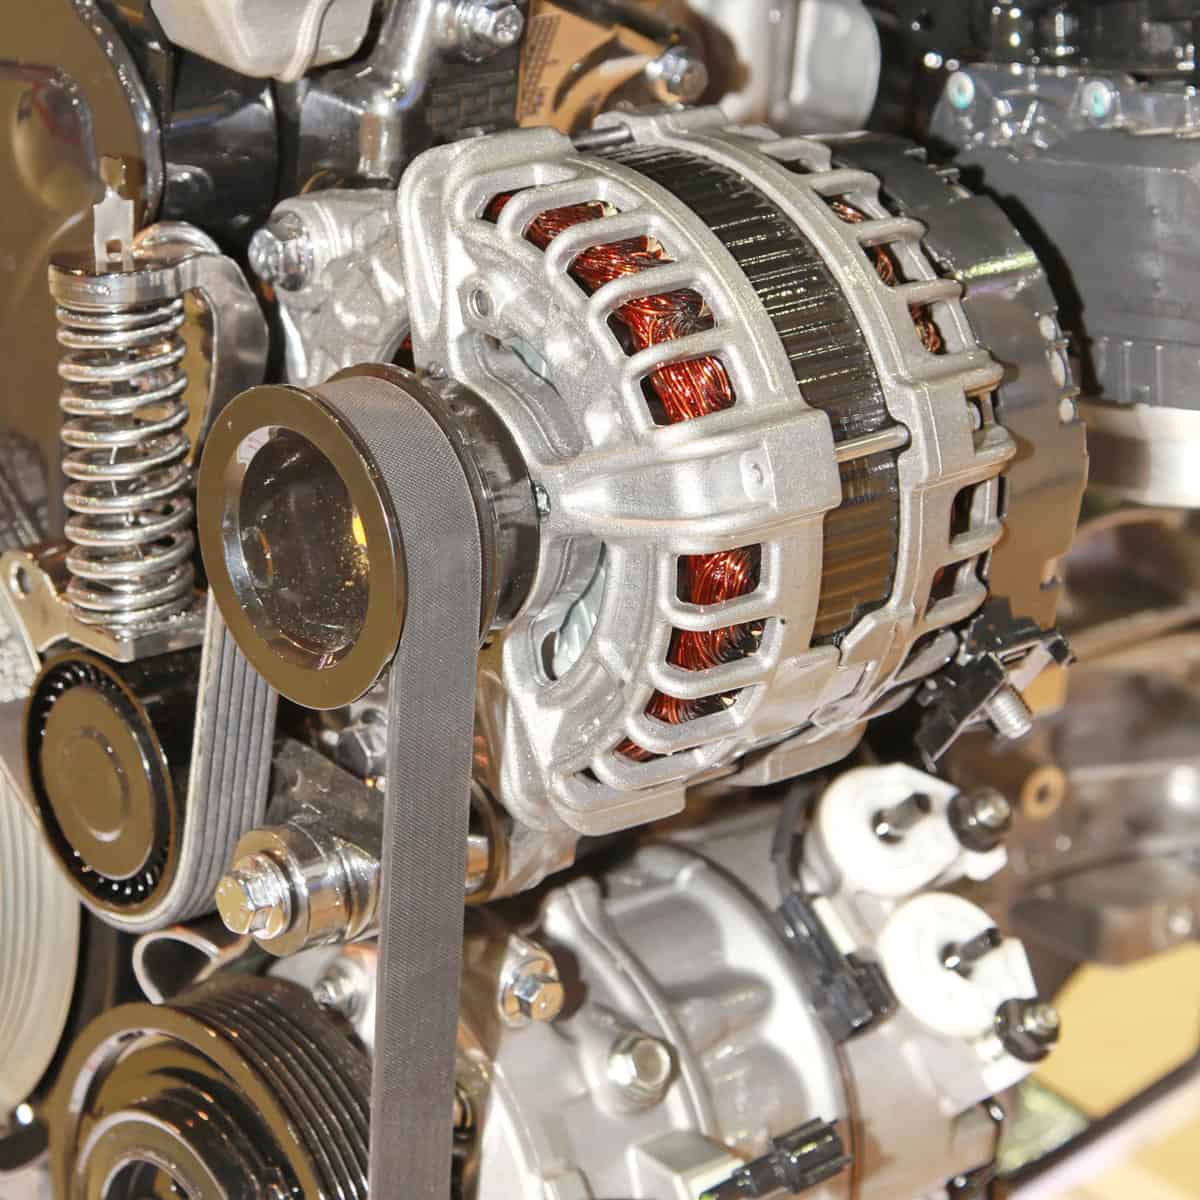 Car alternator converting mechanical energy to electrical energy inside a car